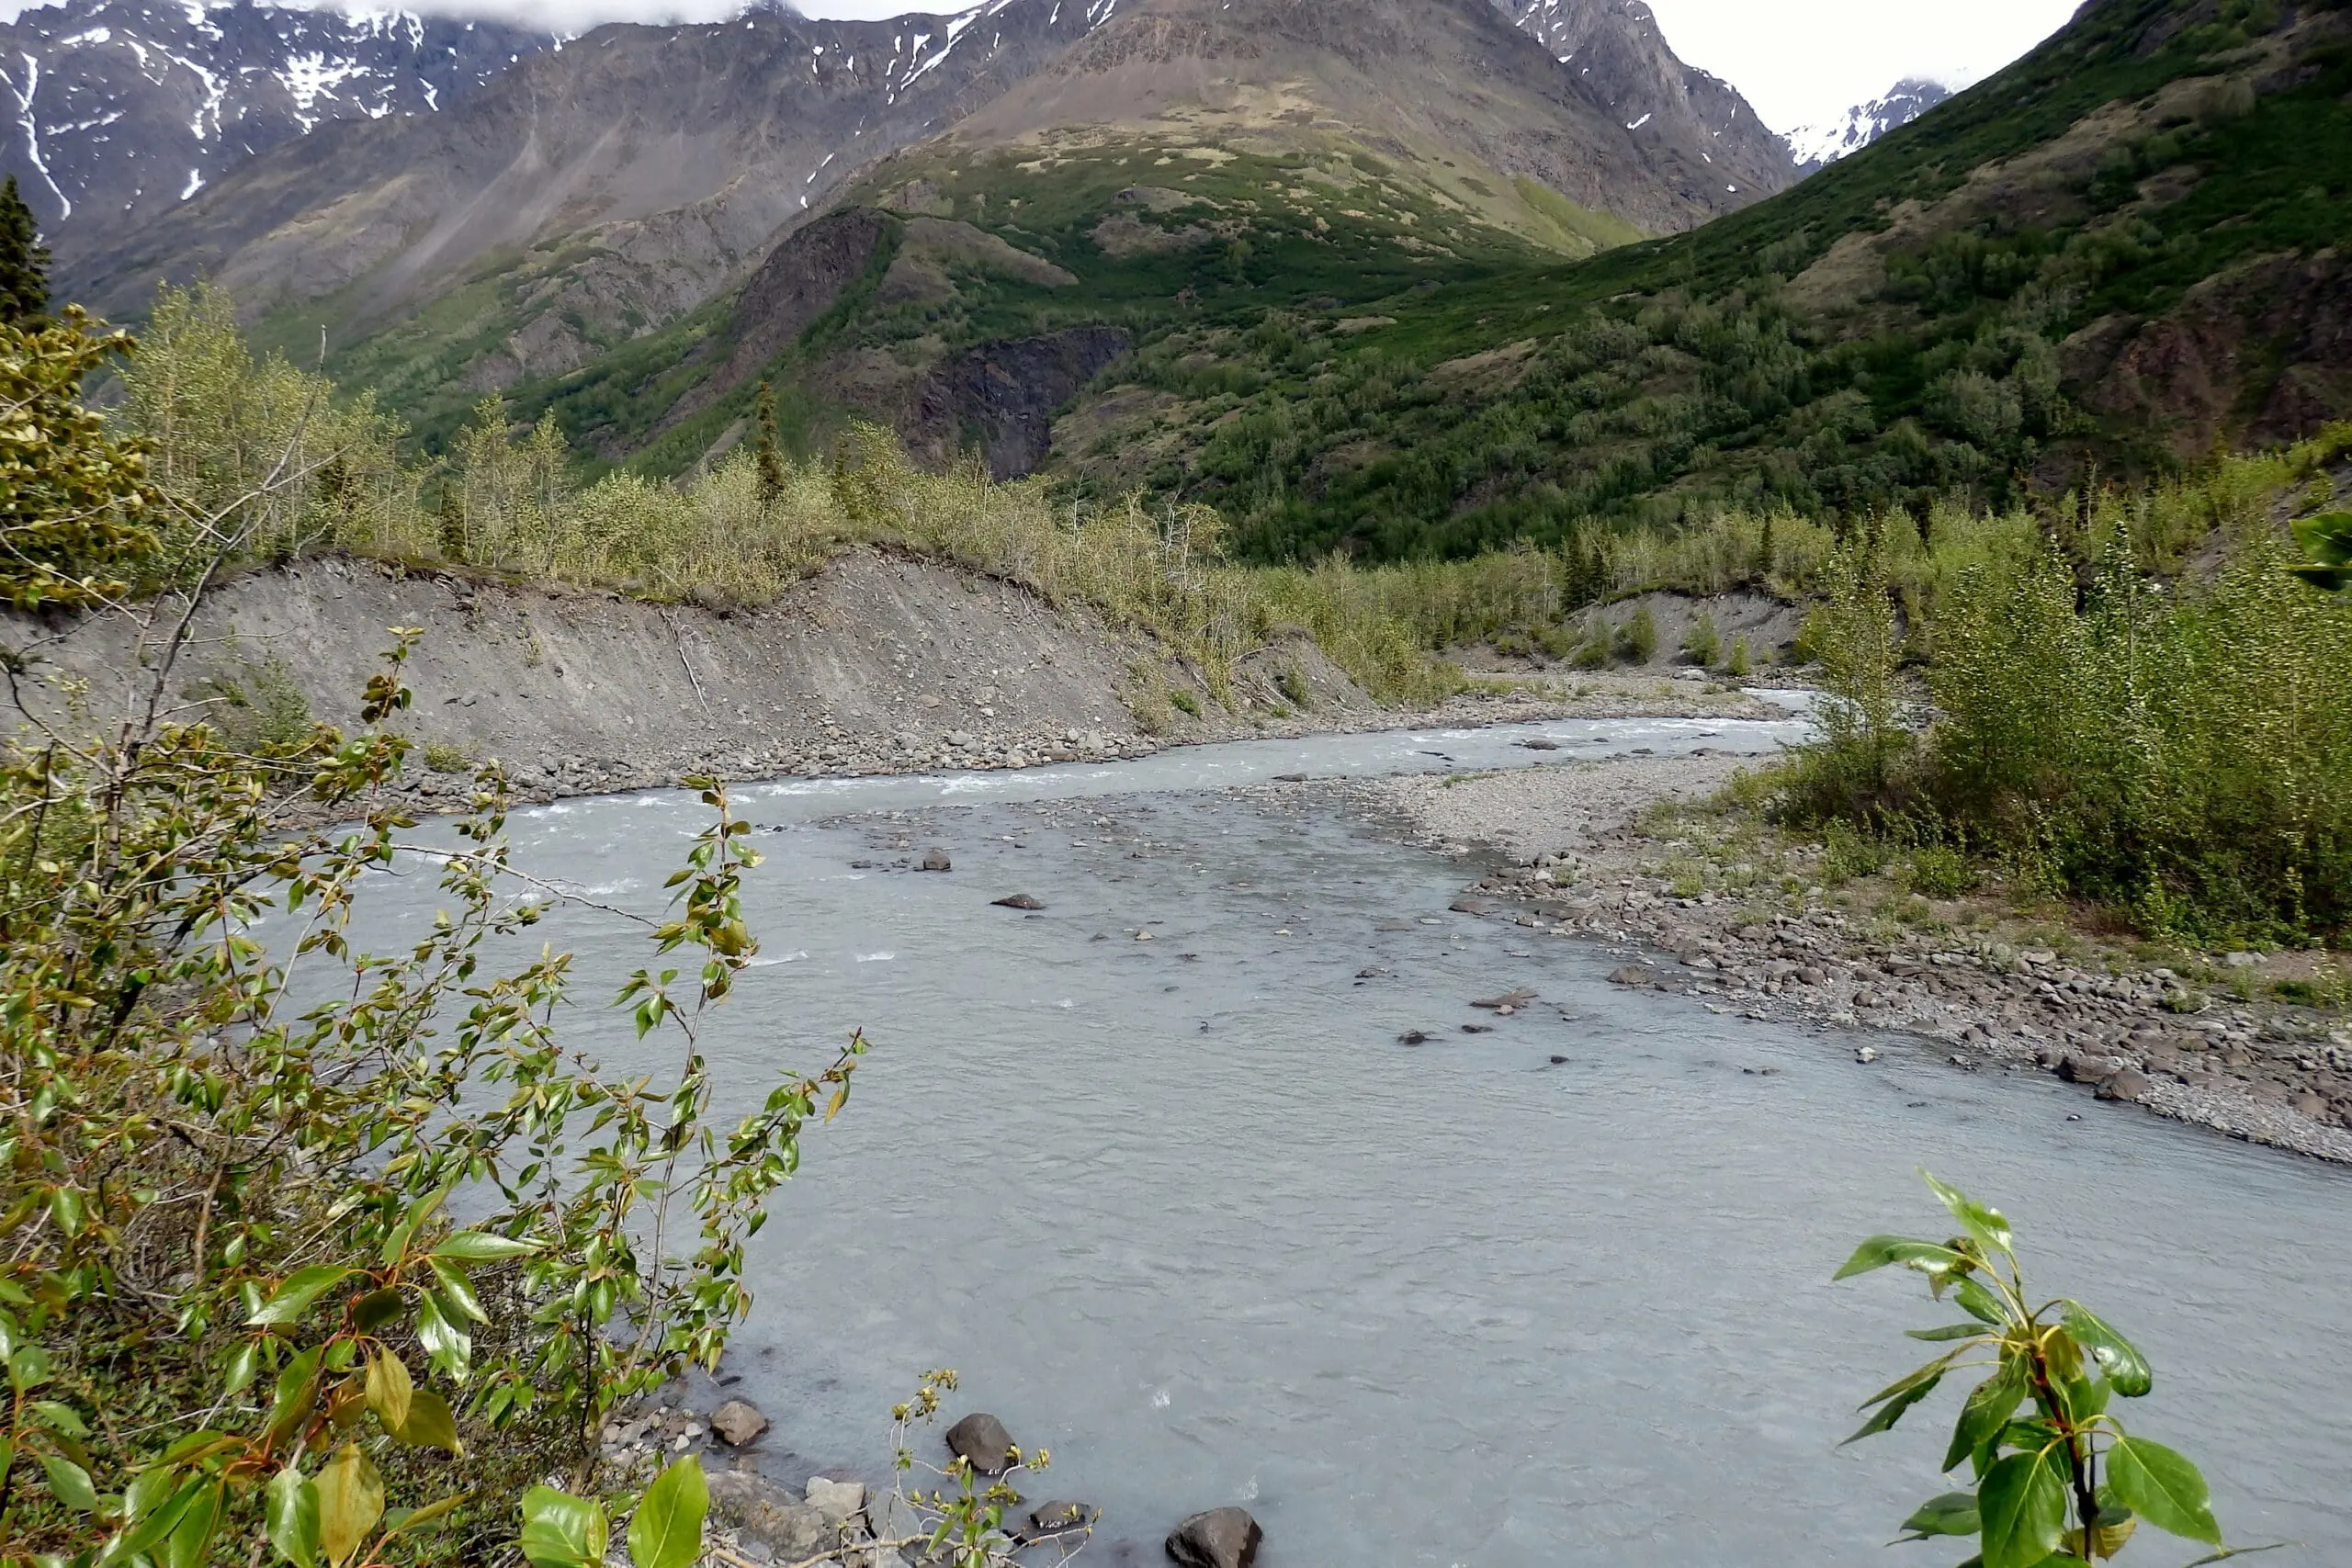 Hiking in the Alaska wilderness and Chugach mountains. Eagle River Alaska